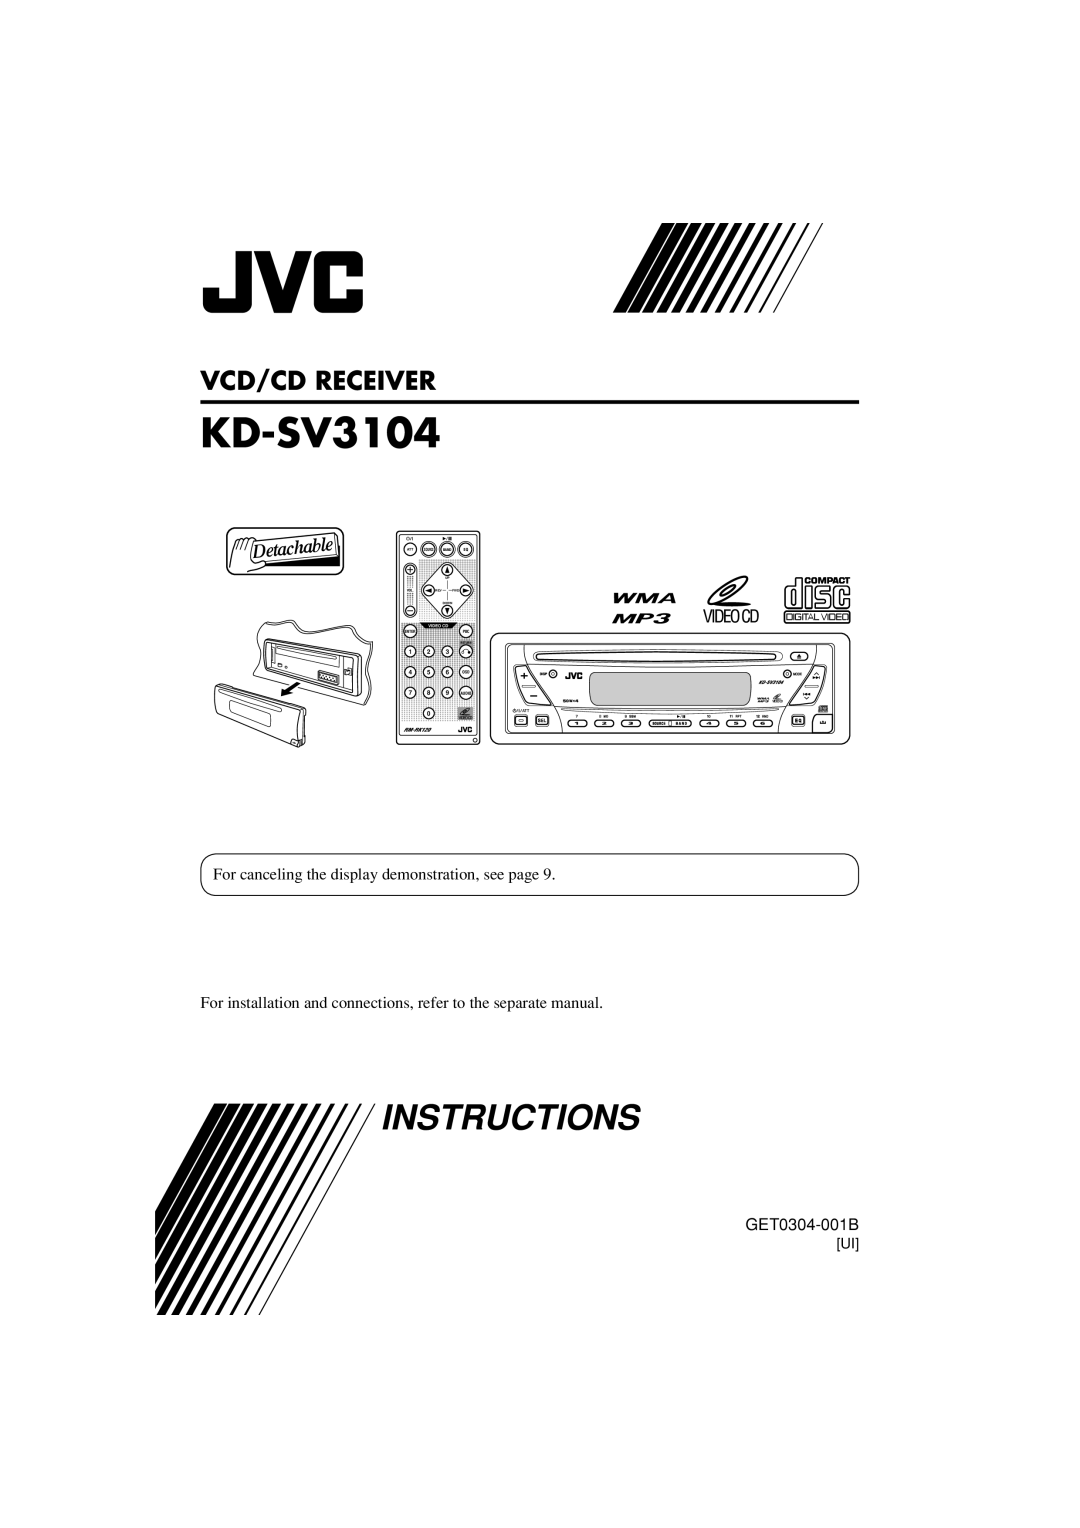 JVC KD-SV3104 manual Vcd/Cd Receiver, Instructions, Att Source Band Eq, Video Cd, Enterpbc, 4 56OSD 7 89AUDIO, Return 